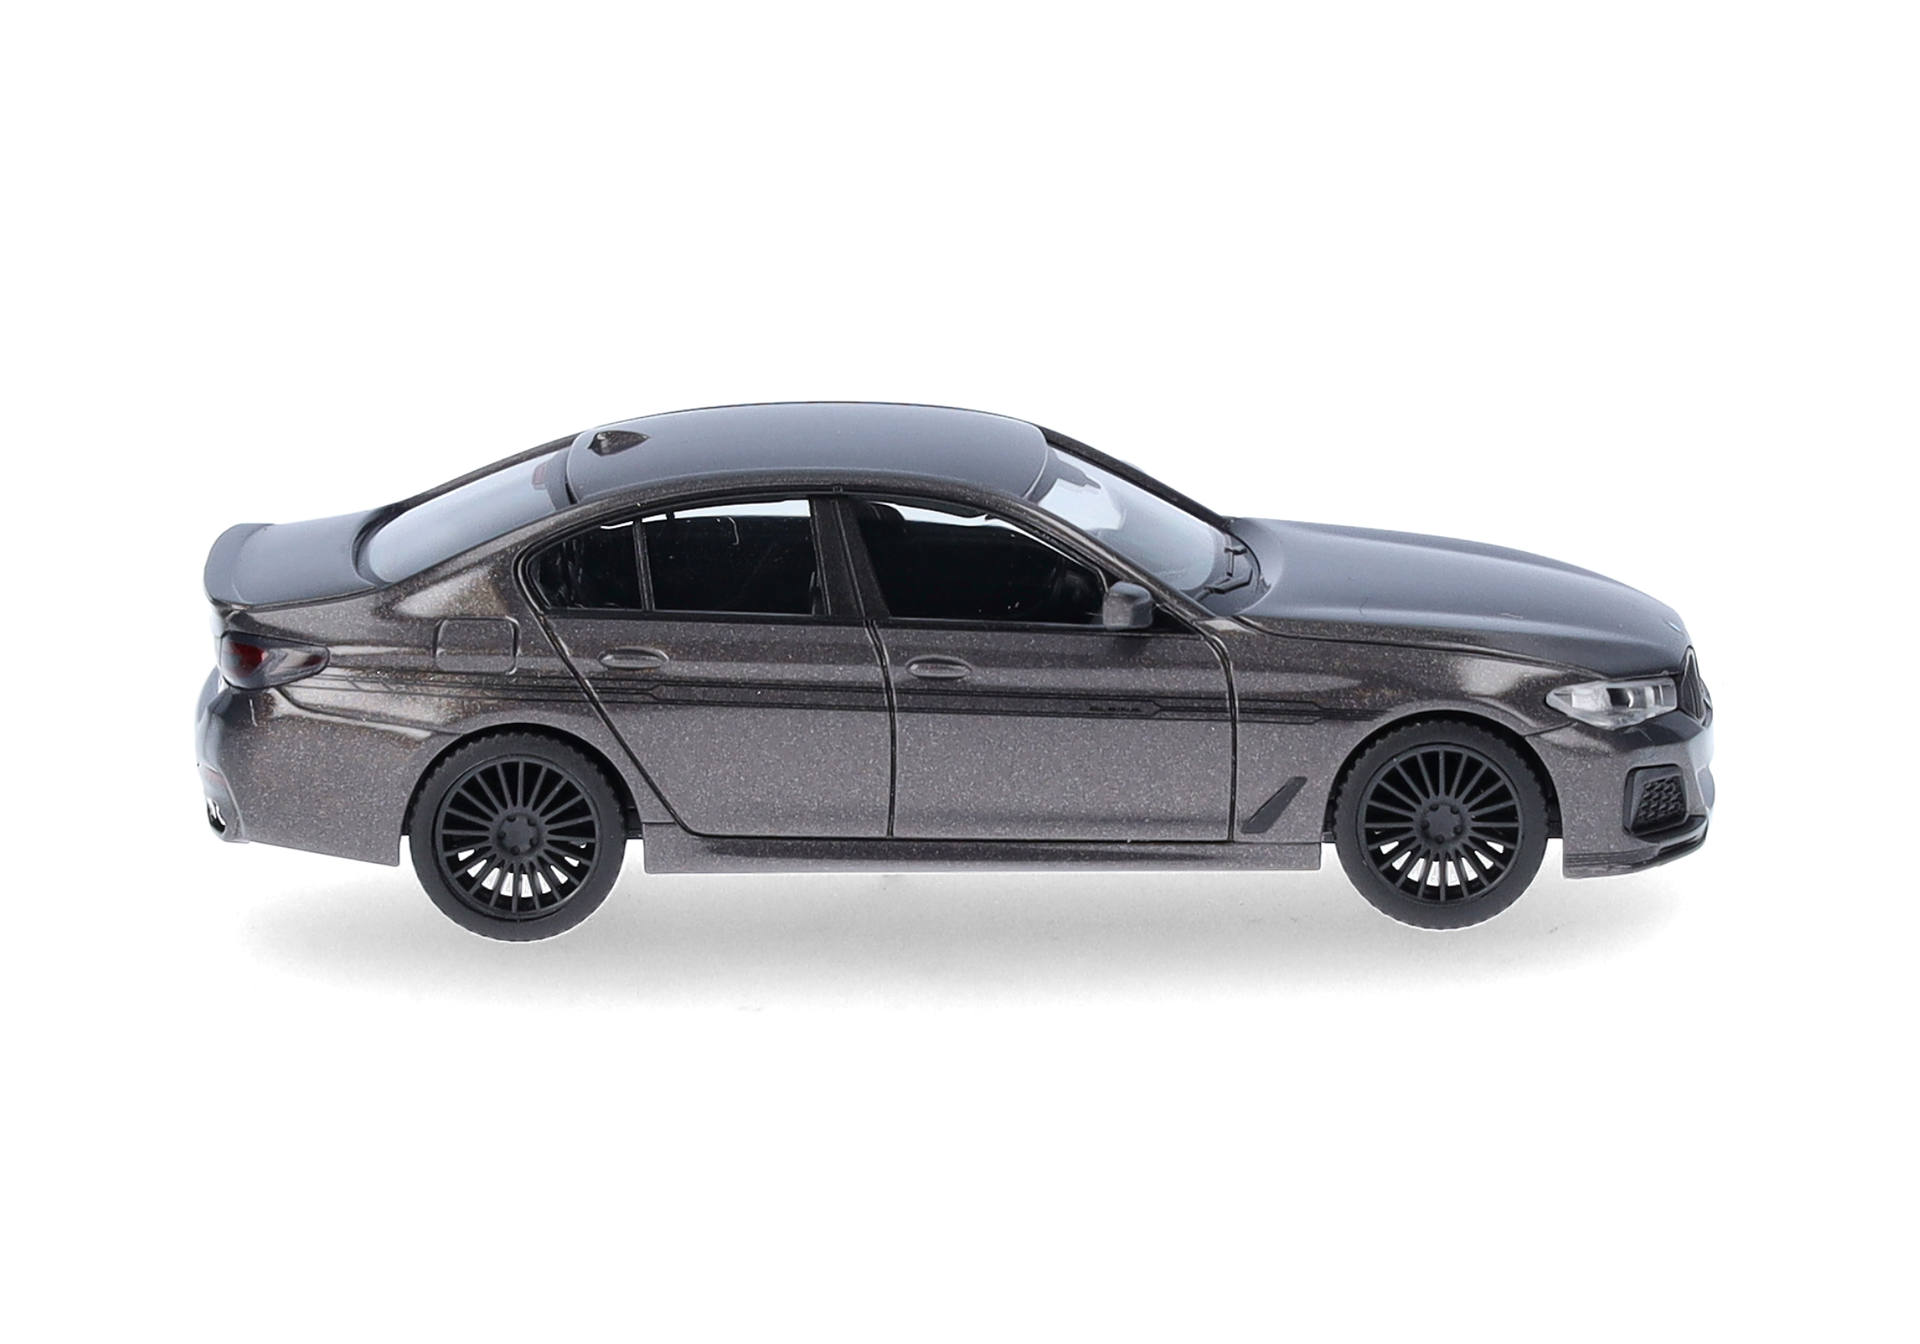 BMW Alpina B5 Limousine, champagne quartz metallic